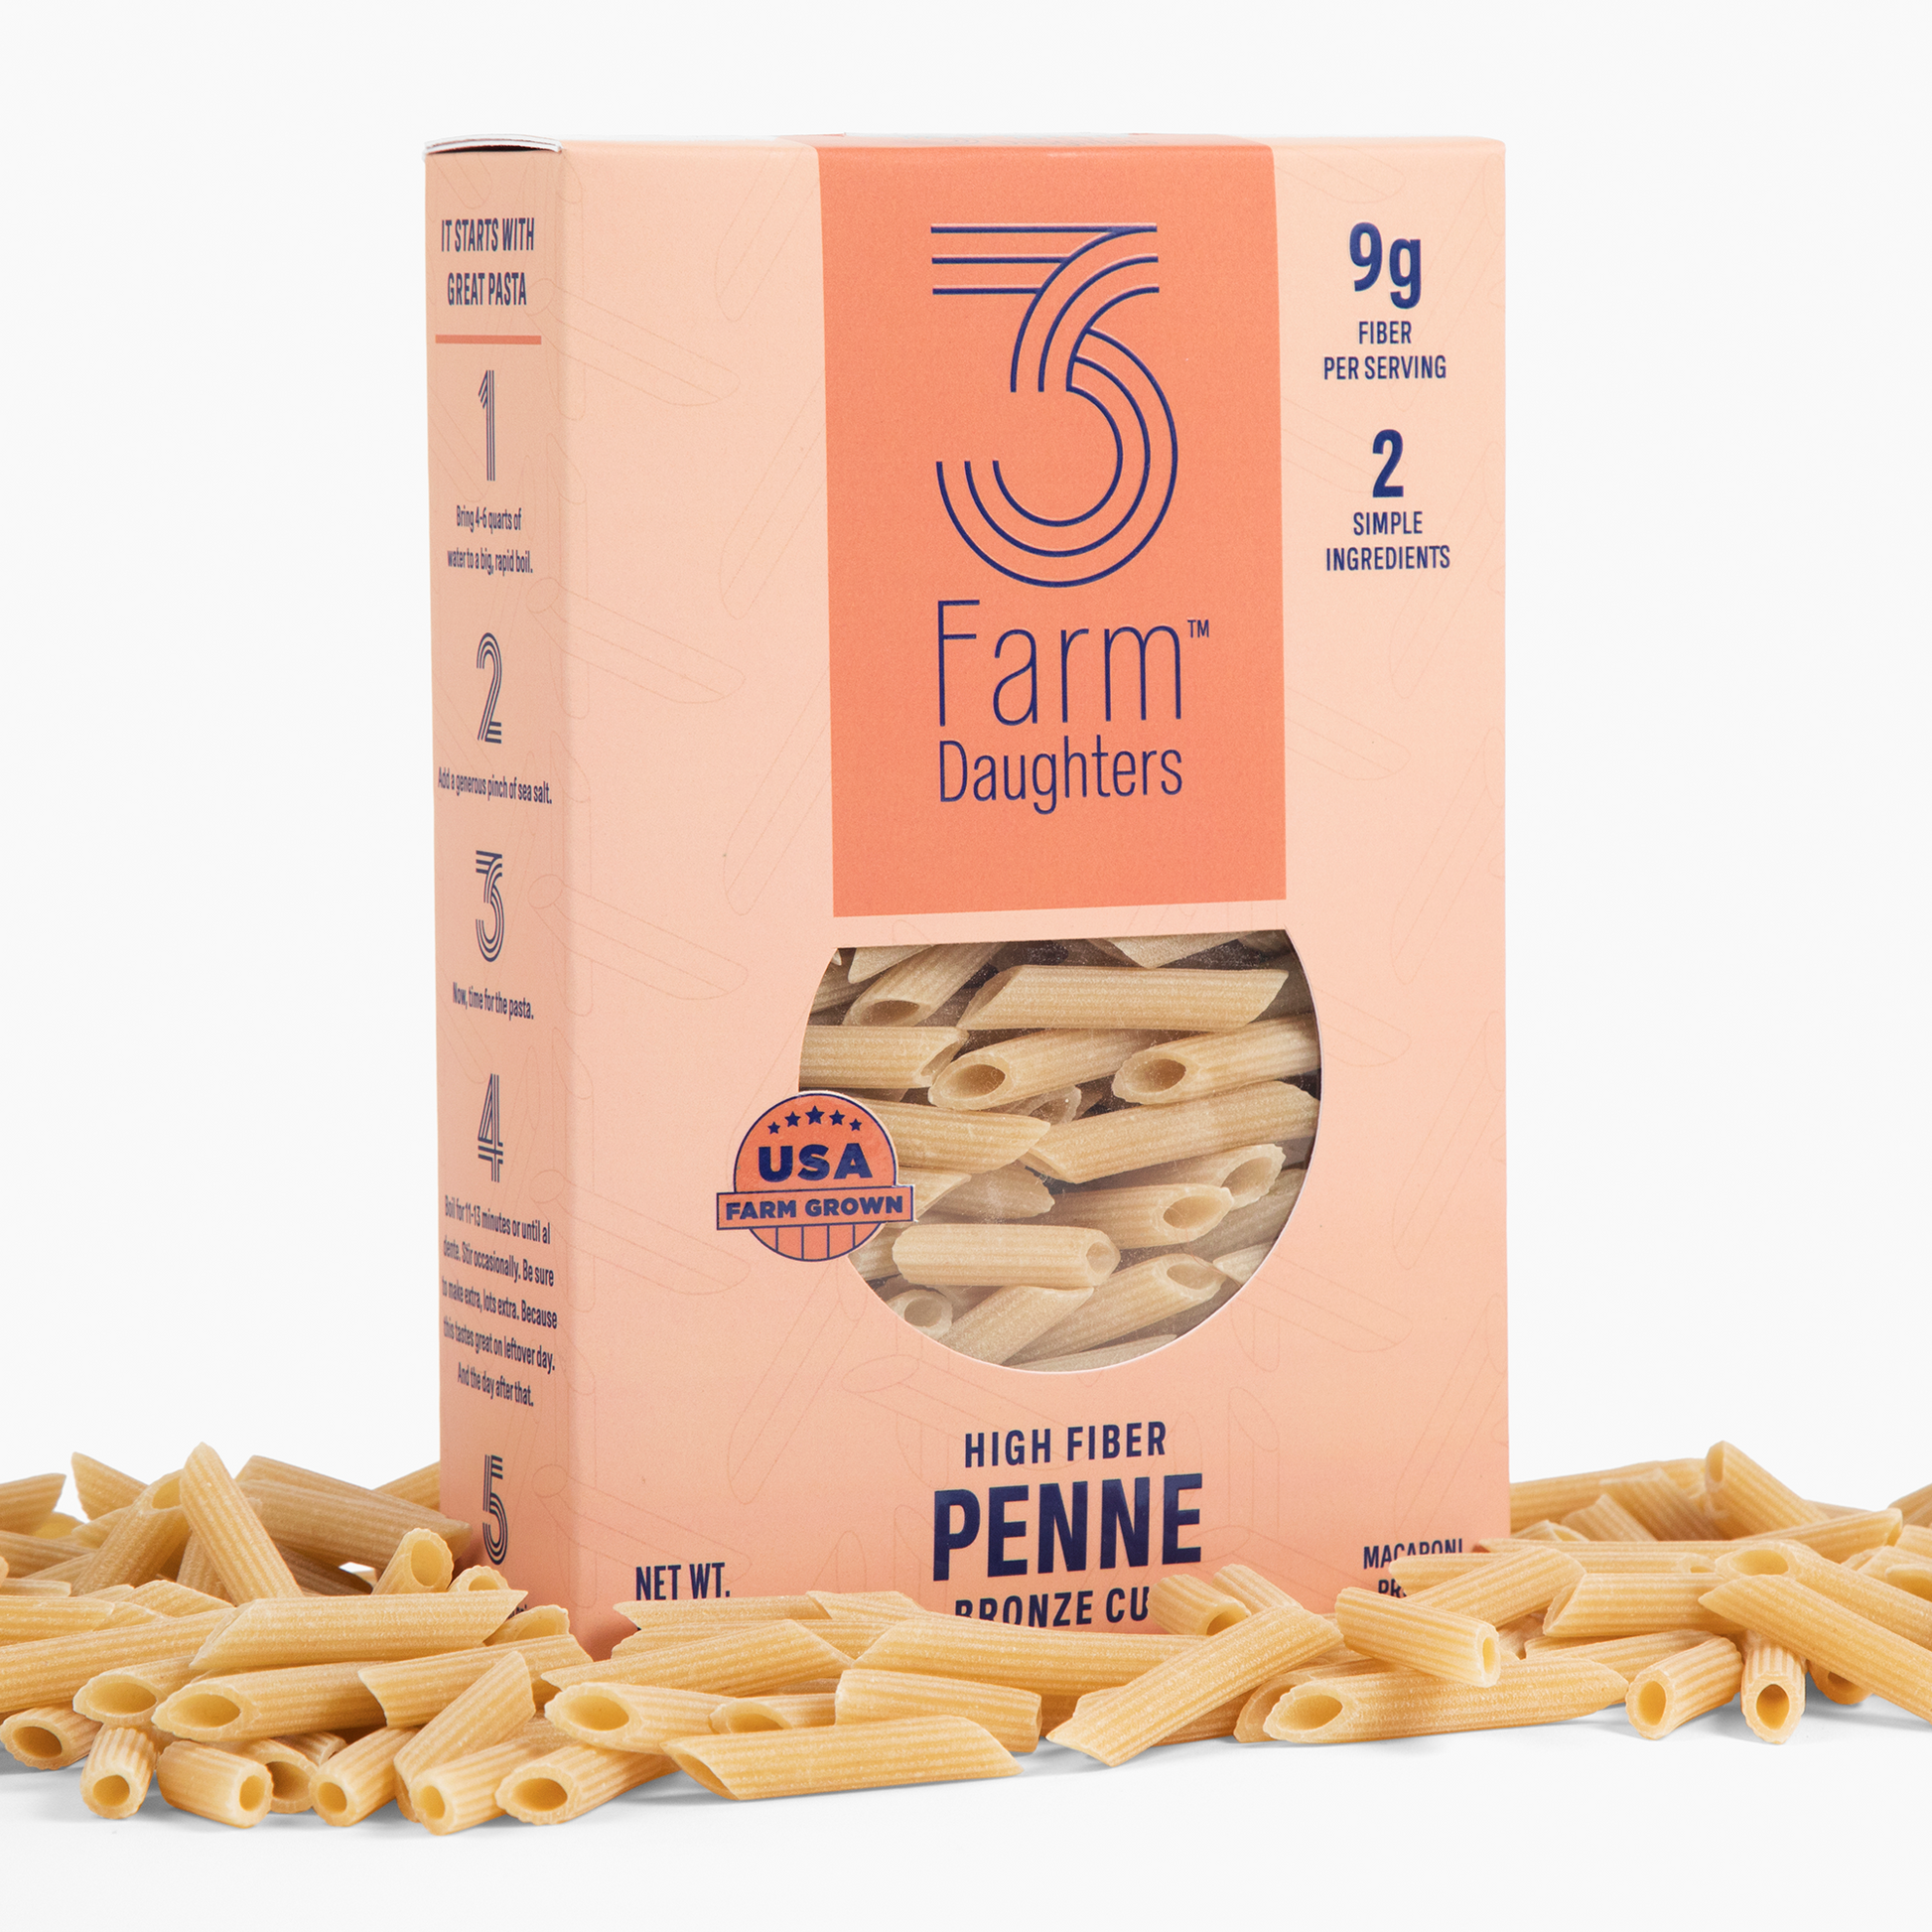 USA farm grown pasta, 2 simple ingredients